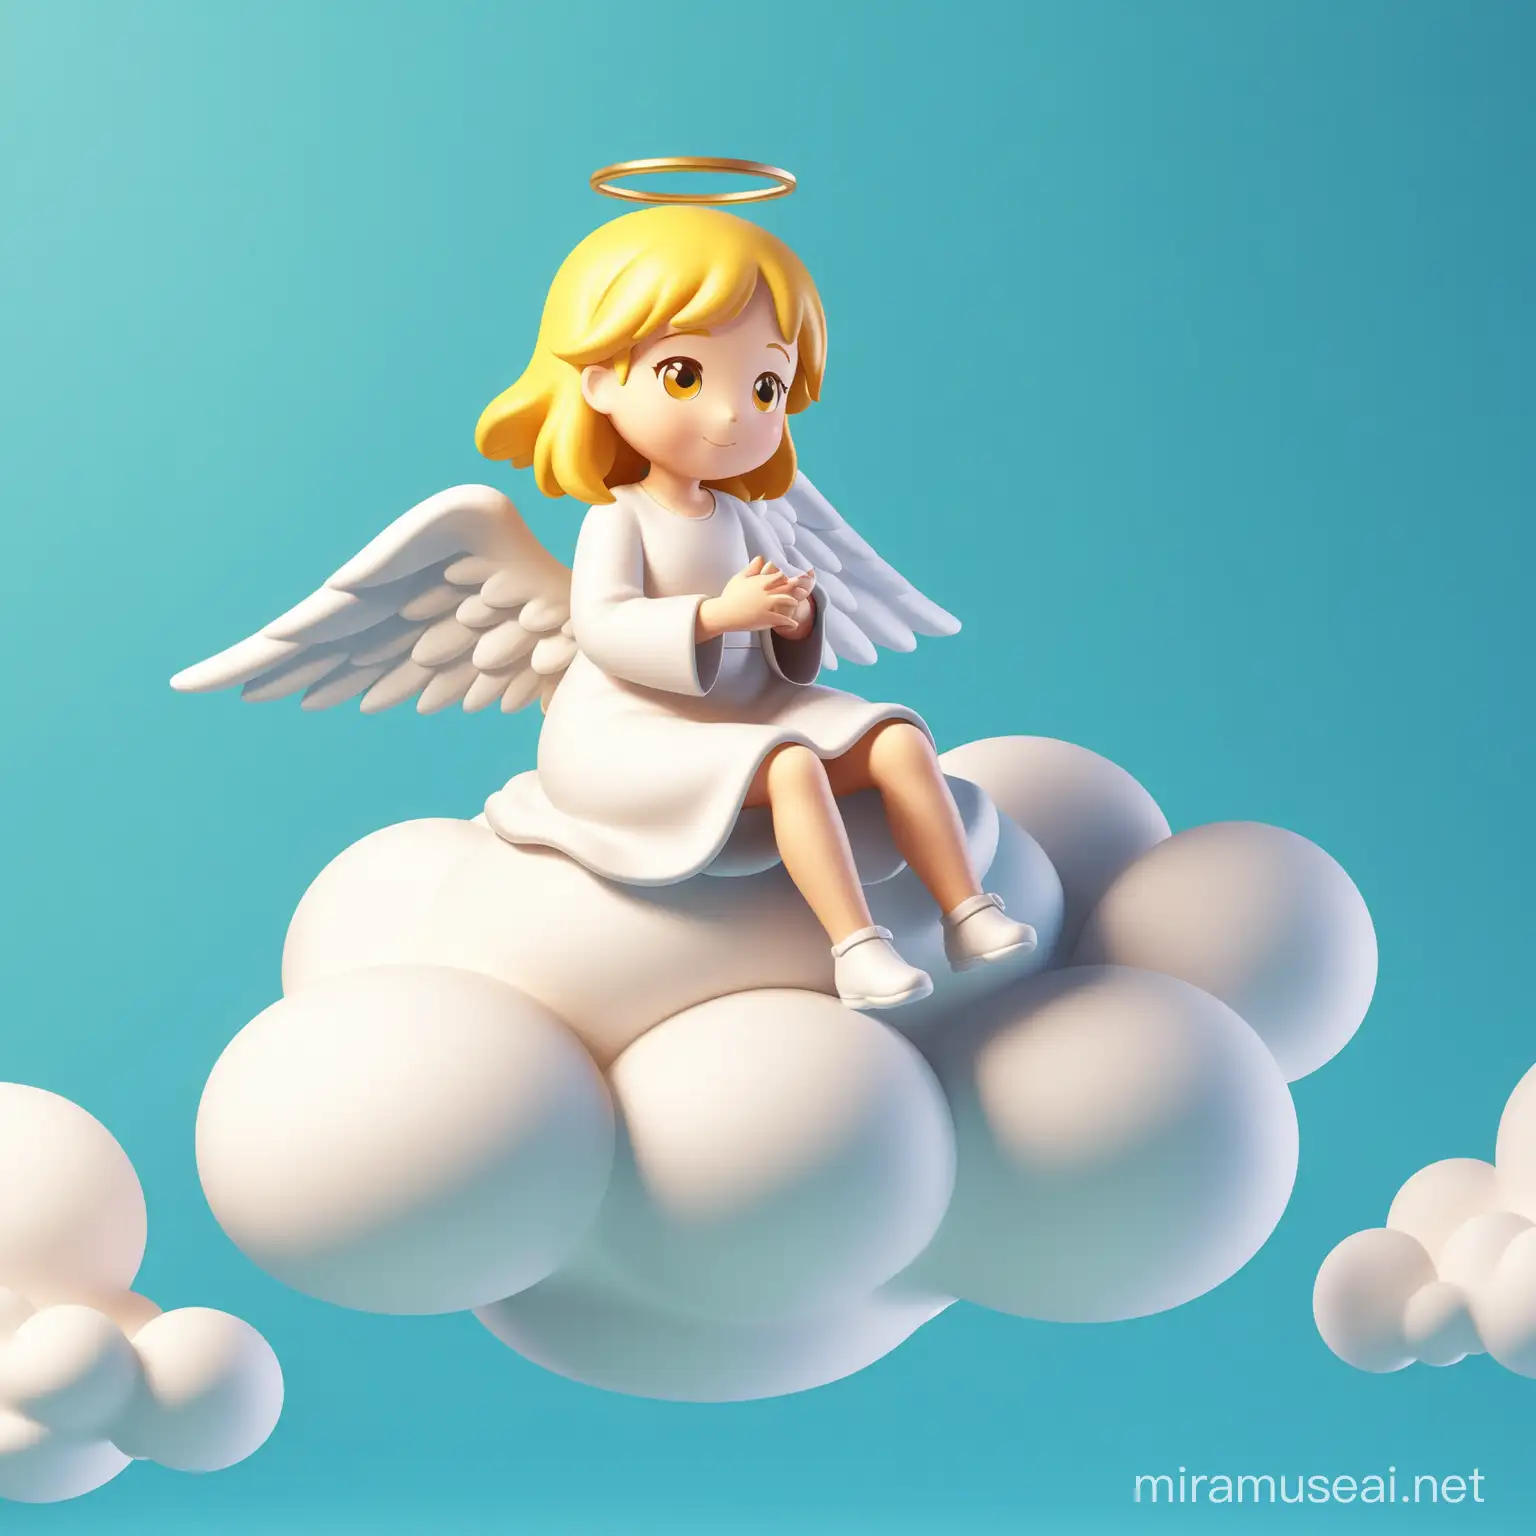 3d like figure of a cartoon biblical angel sitting on a cloud